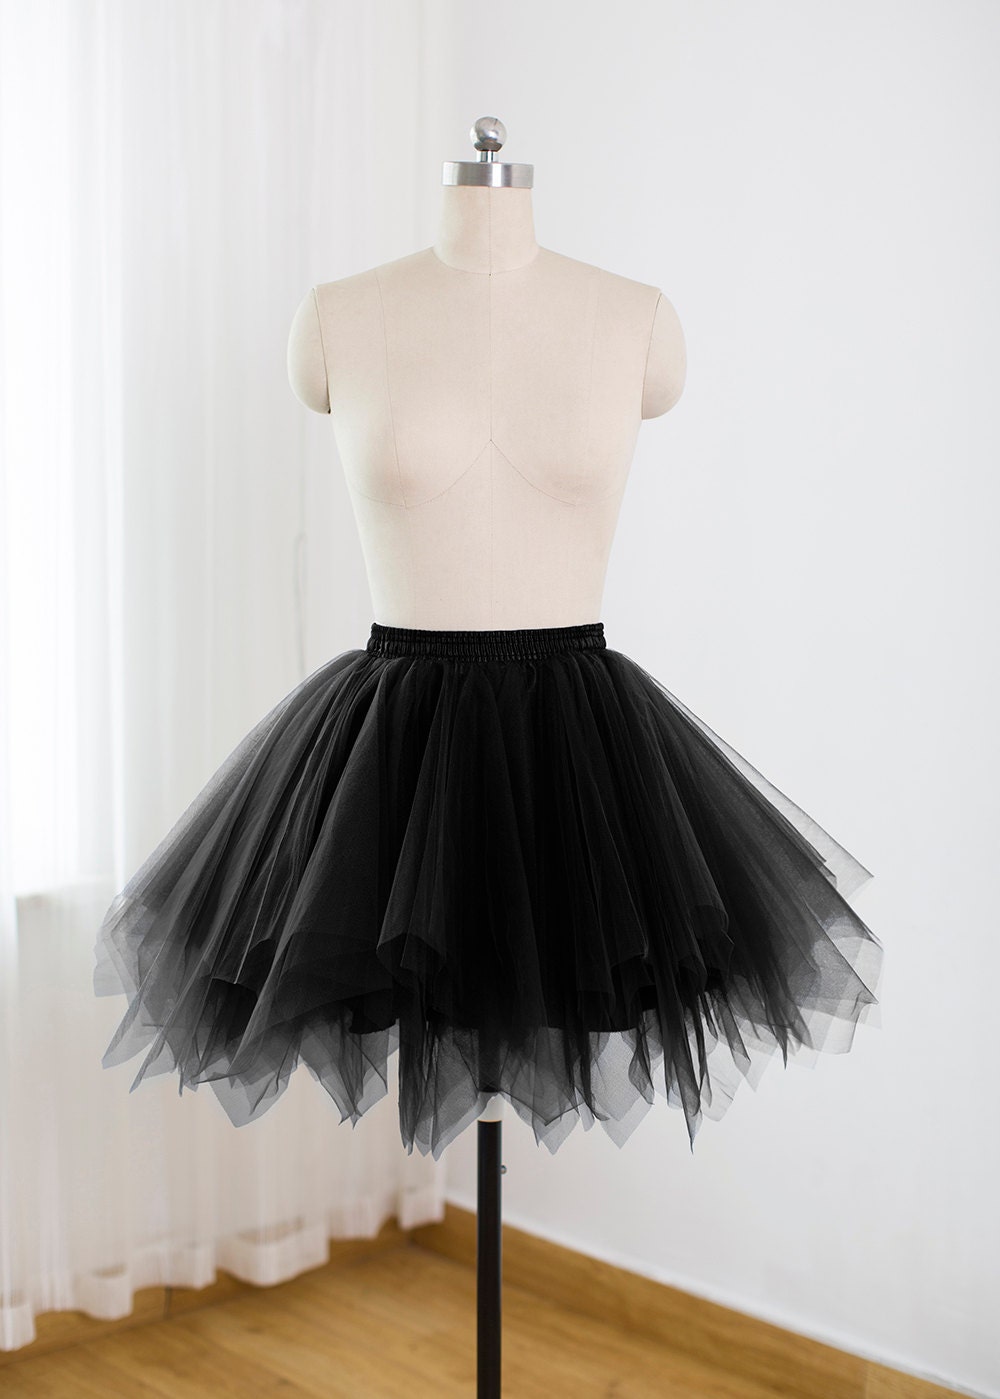 black tutu skirt